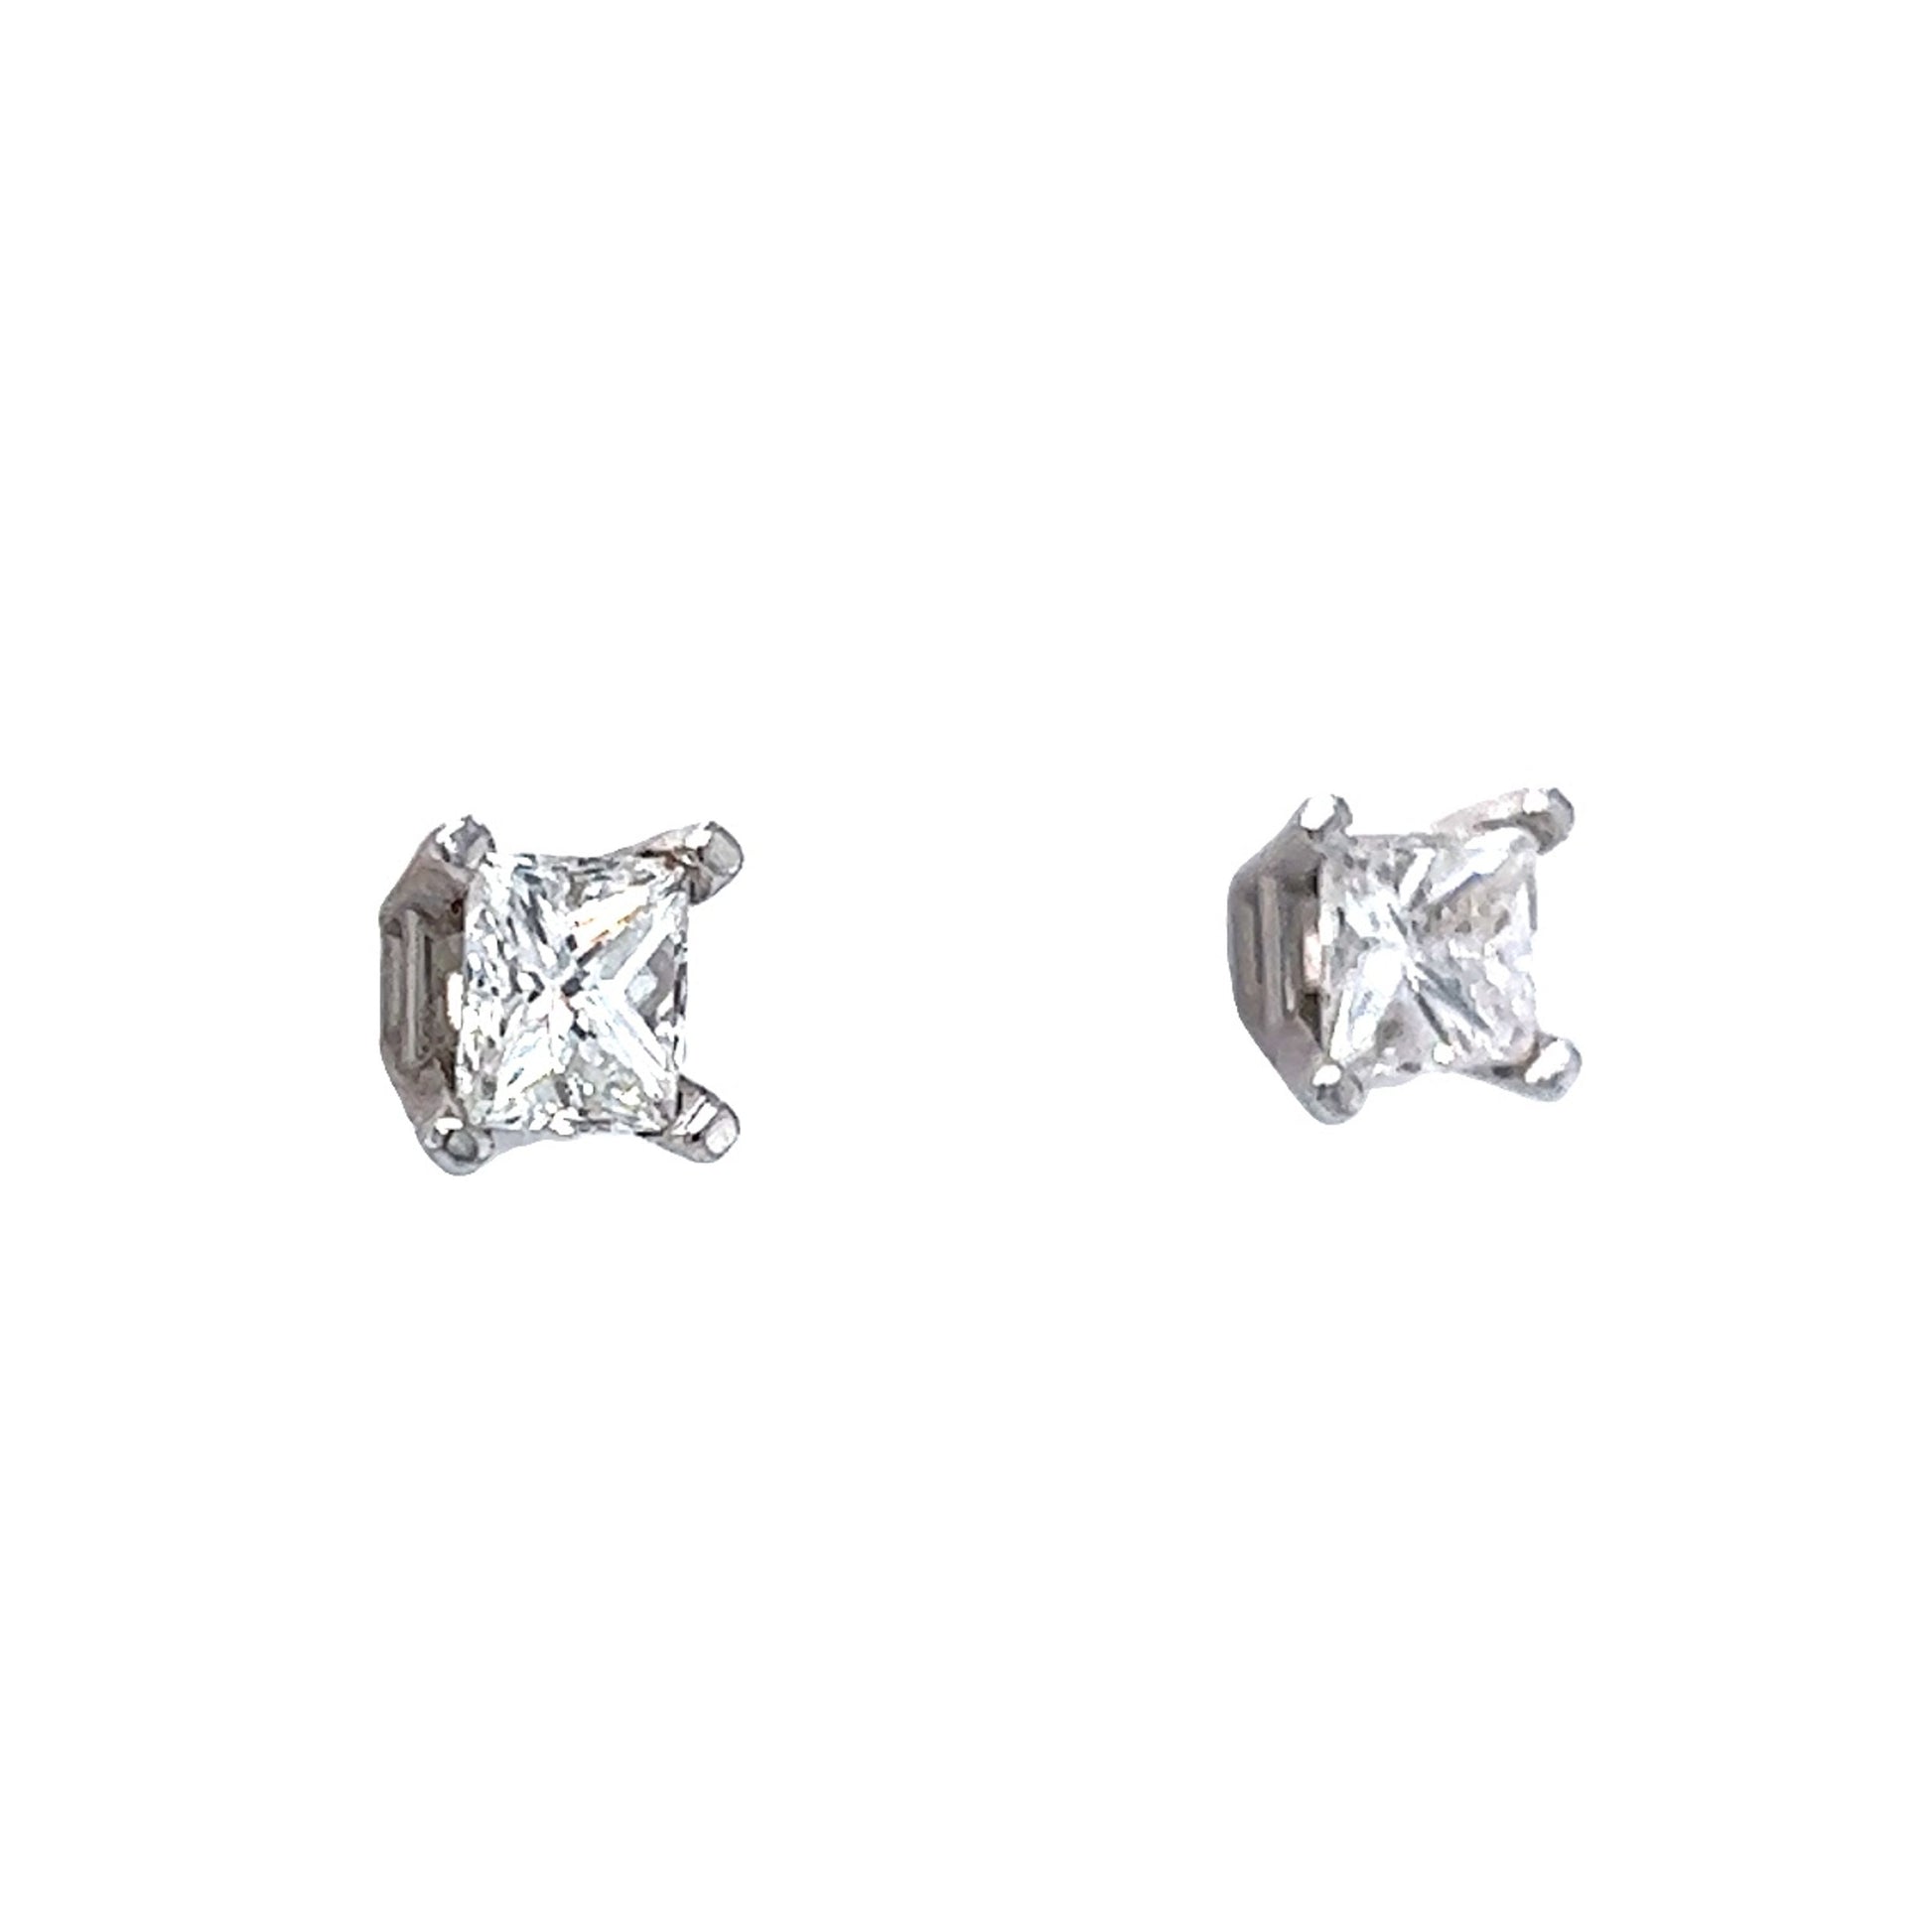 1 Carat Diamond Earring Studs in 14k White GoldComposition: 14 Karat White GoldTotal Diamond Weight: 1.01 ctTotal Gram Weight: 1.5 gInscription: 14k